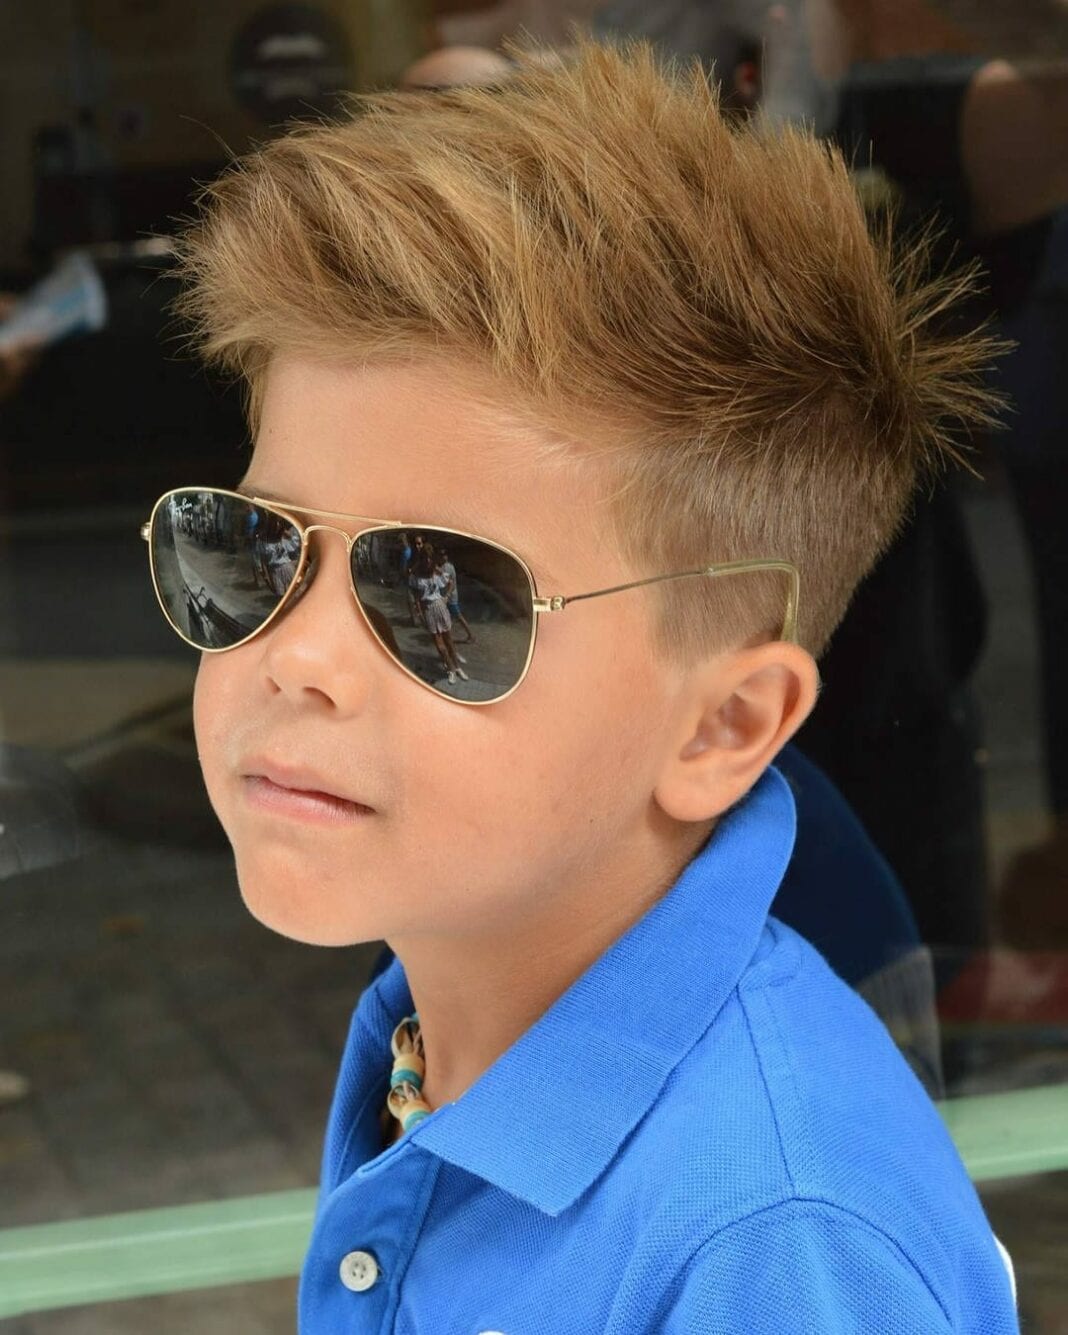 22 Stylish and Trendy Boys Haircuts 2021 - Hottest Haircuts